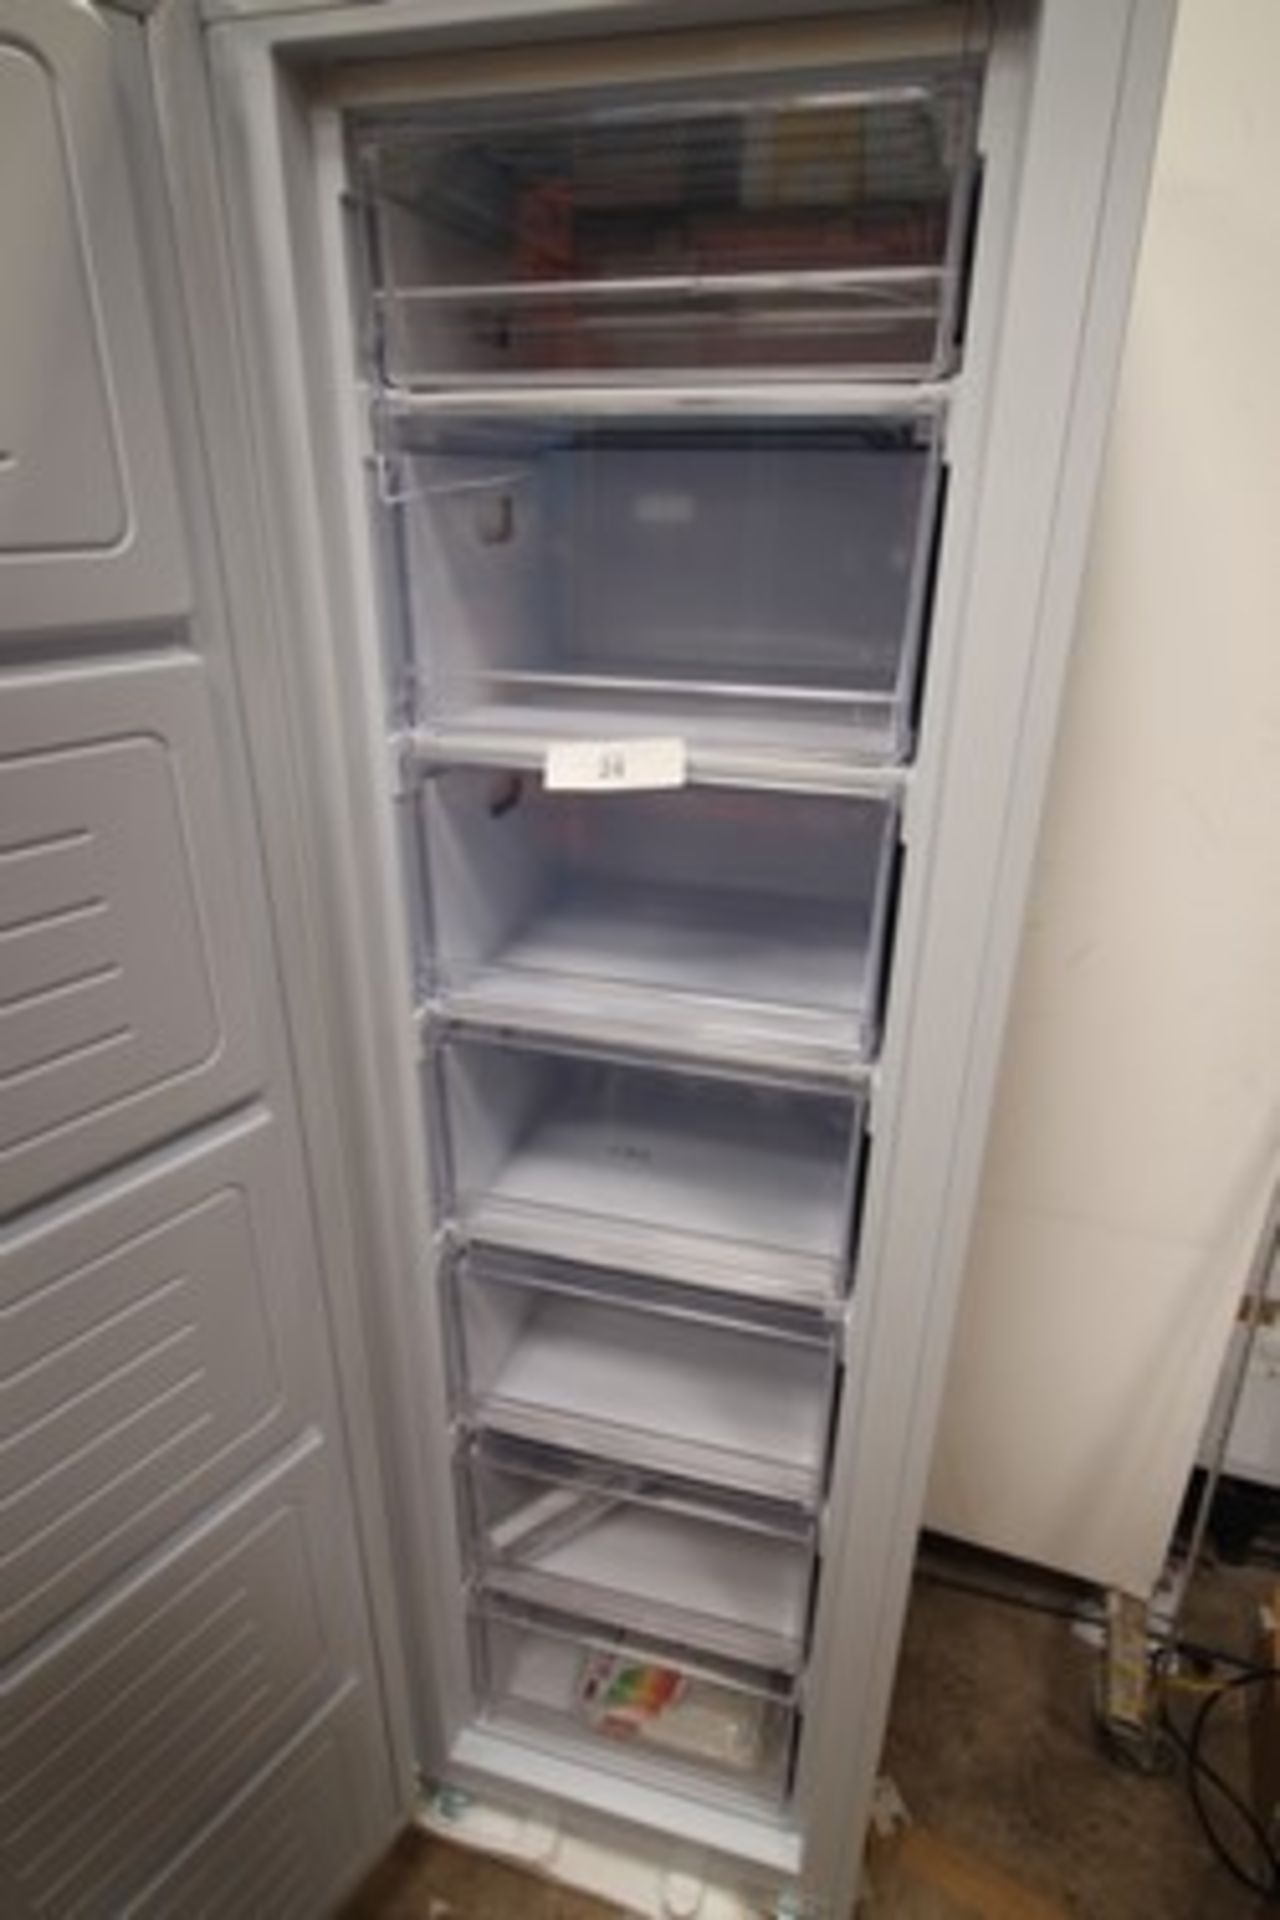 1 x CDA integrated freezer, model No: FW881/4, dented front top panel, dented rear left corner, - Image 4 of 6